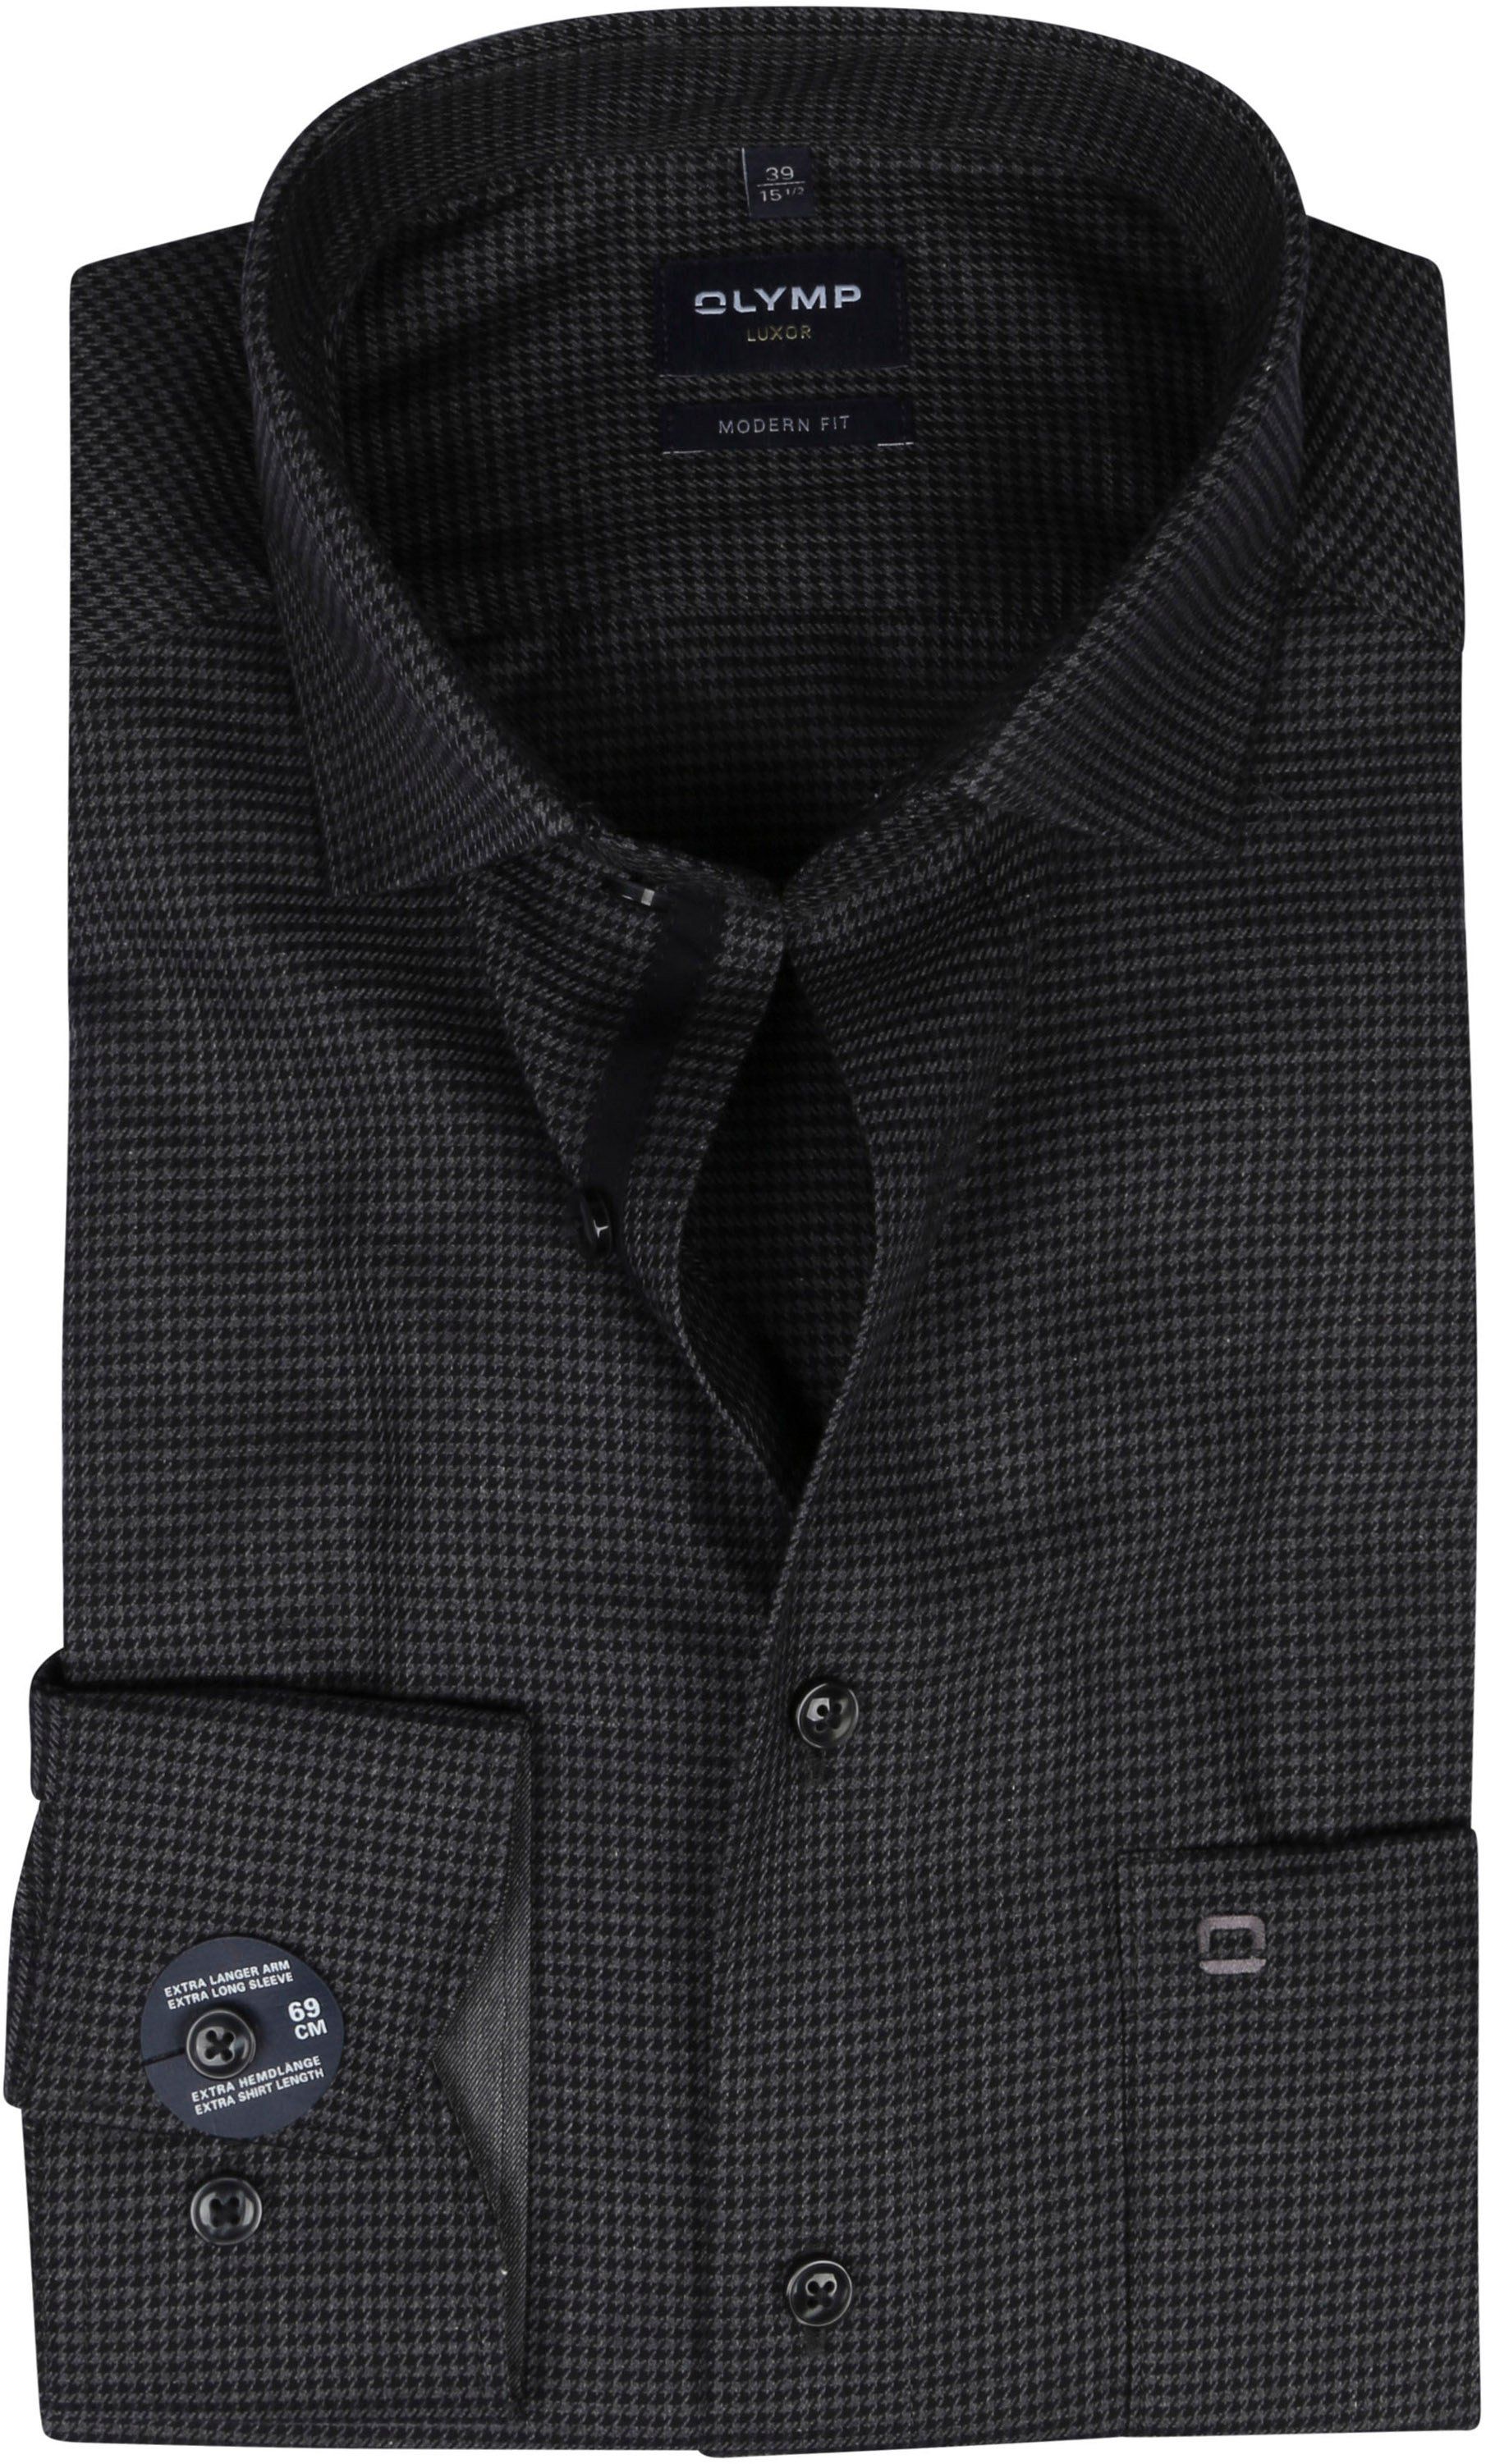 OLYMP Luxor Modern Fit Shirt Pied de Poule Dark Grey Black Grey size 15 3/4